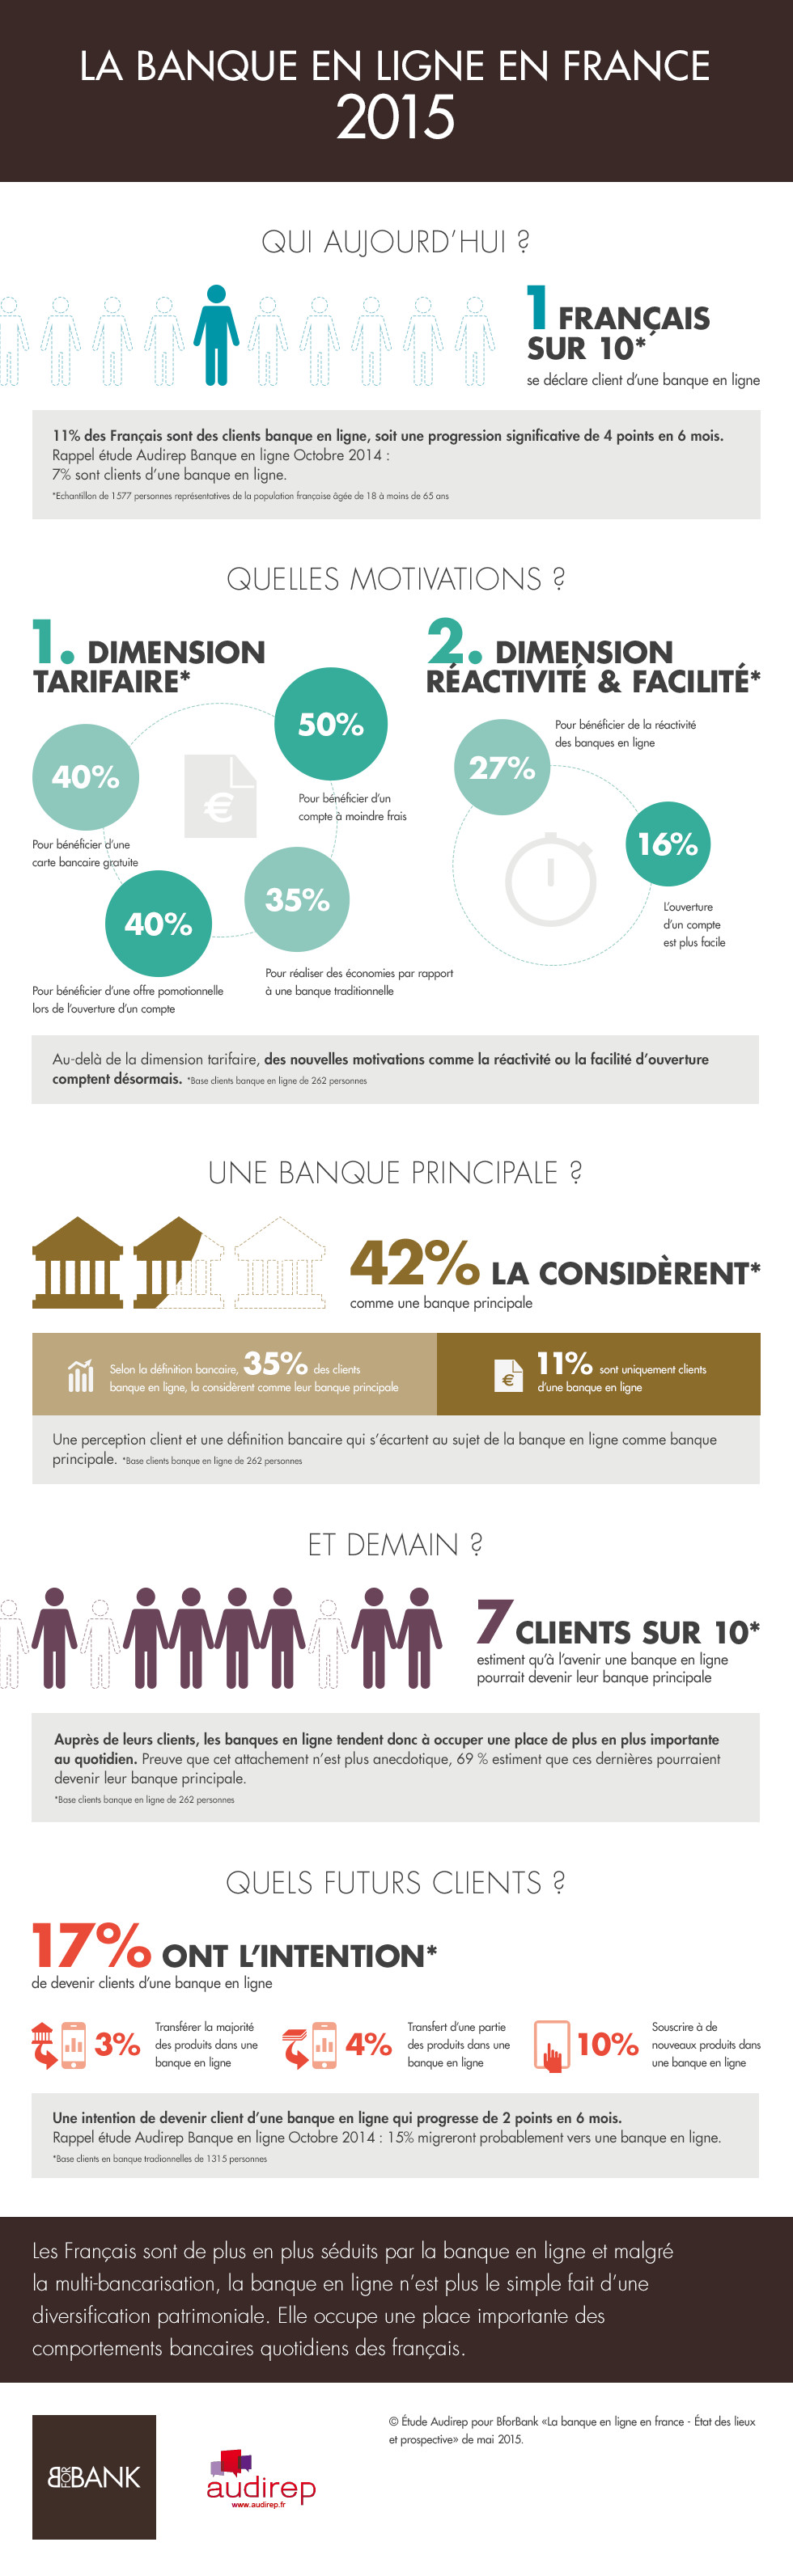 La banque en ligne en France - 2015